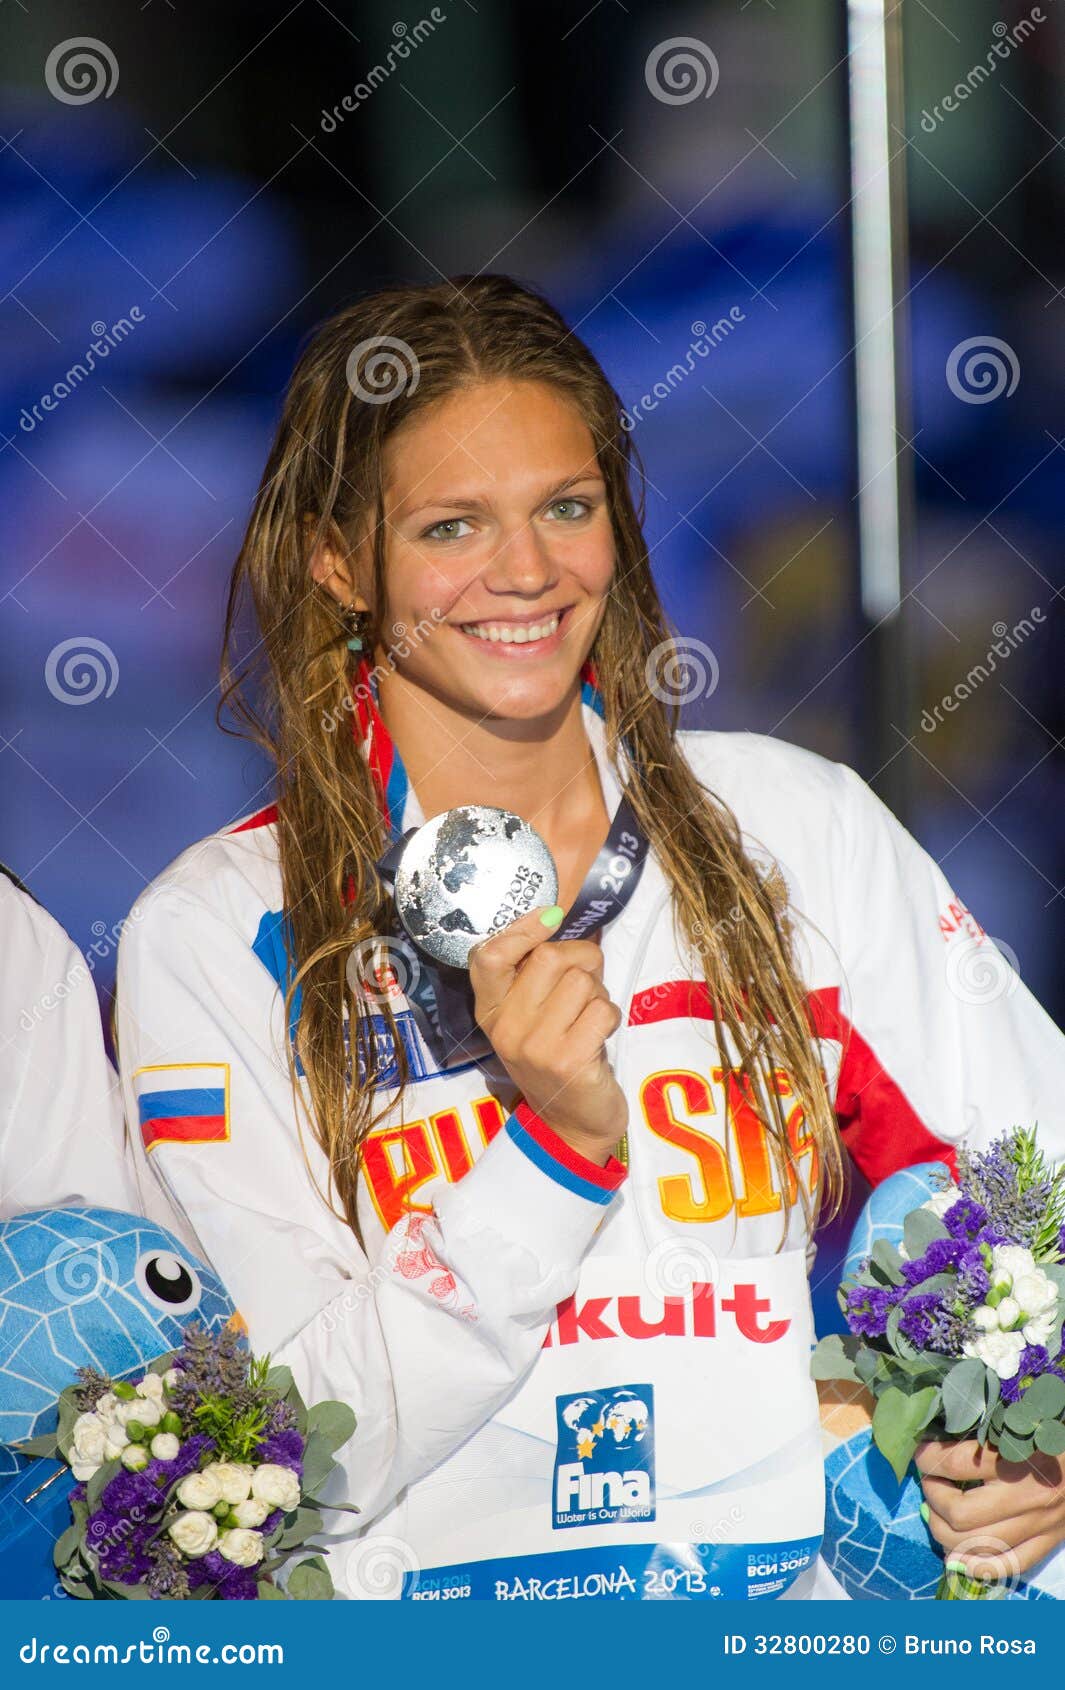 yuliya-efimova-russia-barcelona-july-vicroty-cerimony-barcelona-fina-world-swimming-championships-july-barcelona-32800280.jpg